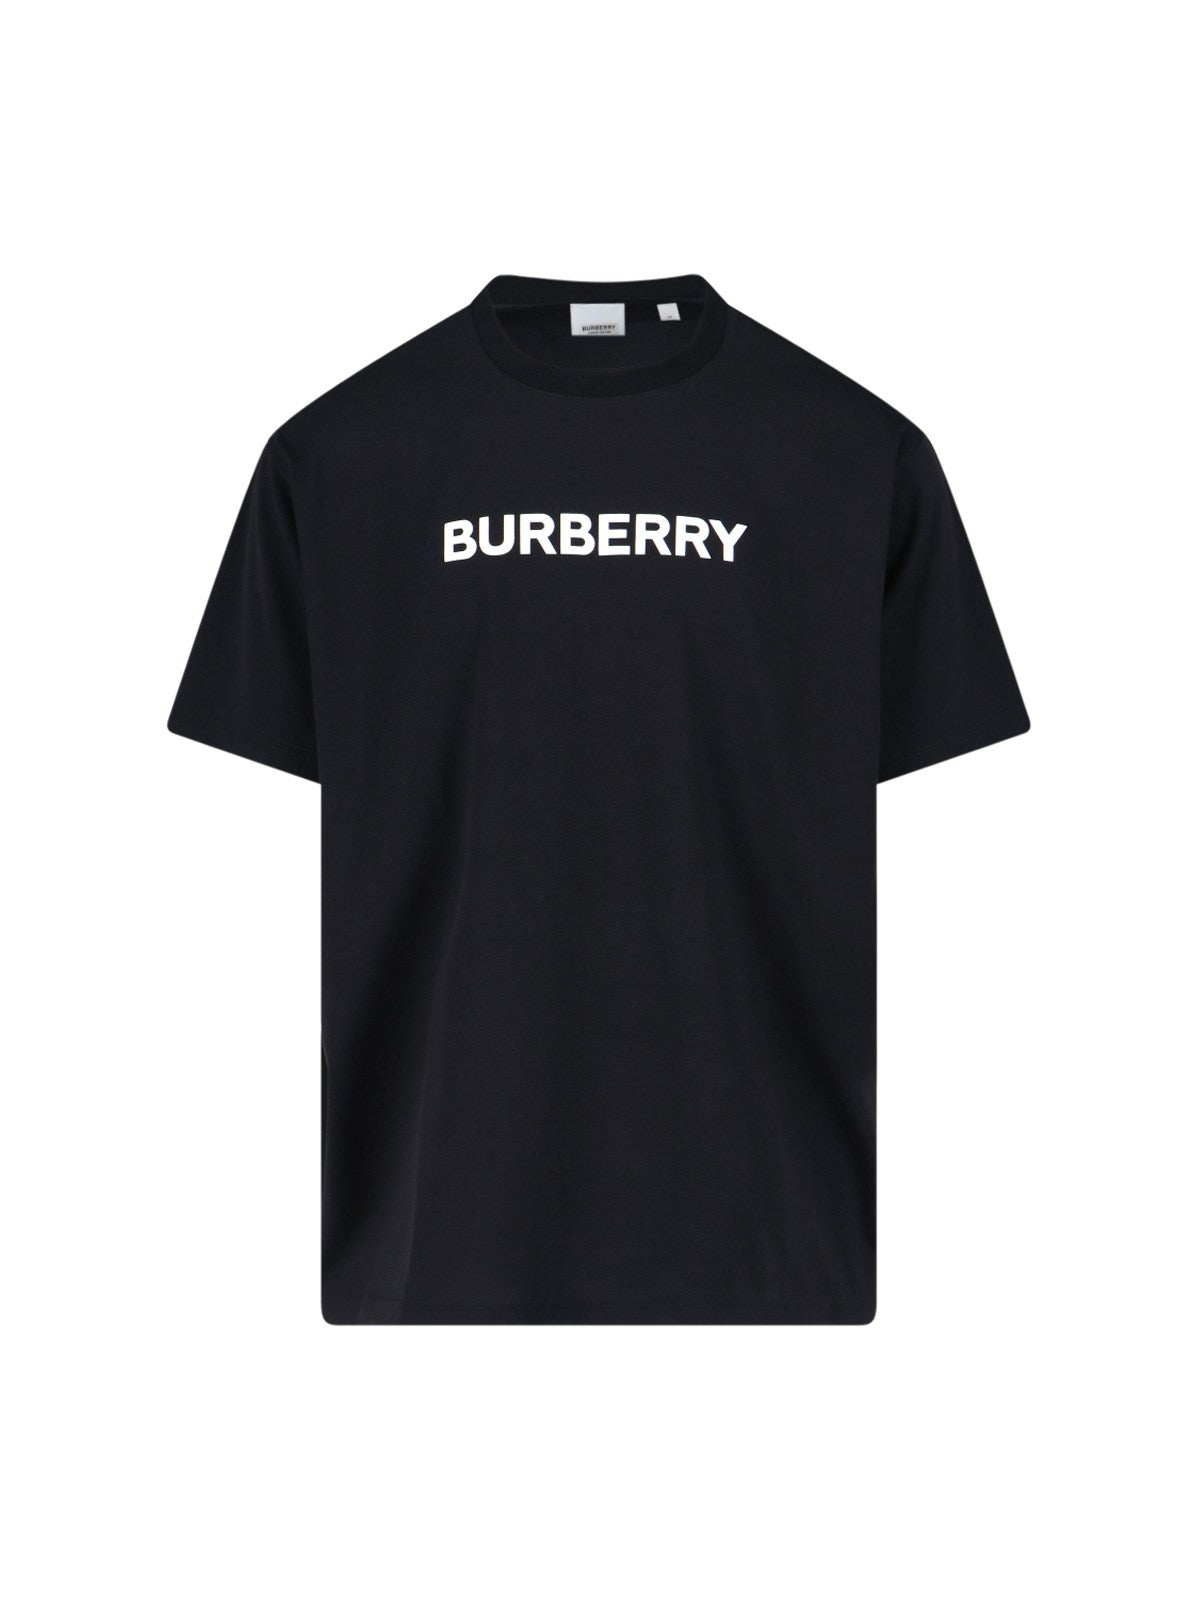 burberry t-shirt oversize logo